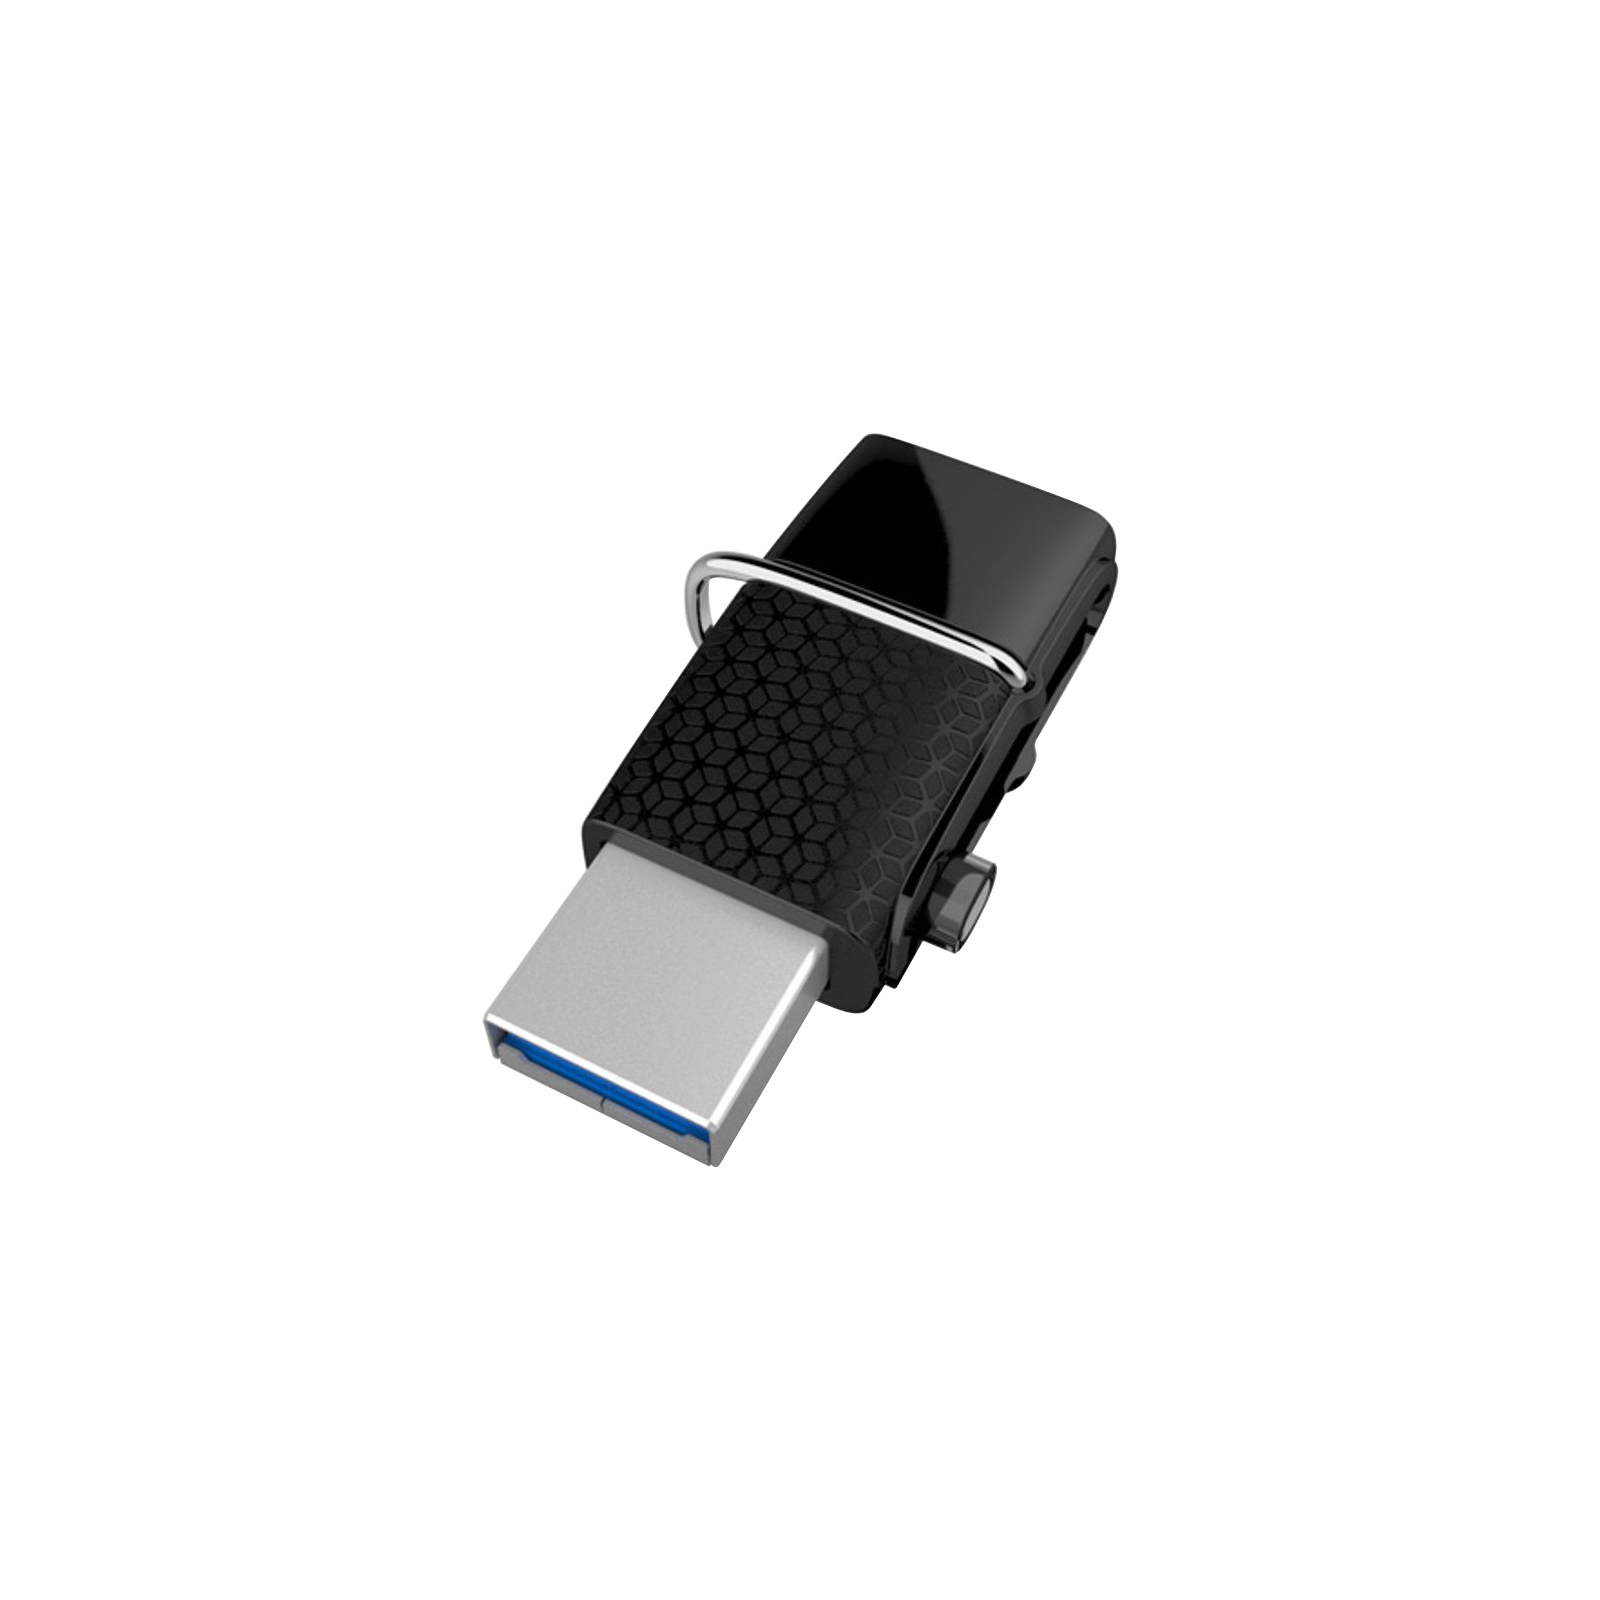 USB флеш накопитель SanDisk 128GB Ultra Dual Drive OTG Black USB 3.0 (SDDD2-128G-G46) изображение 5